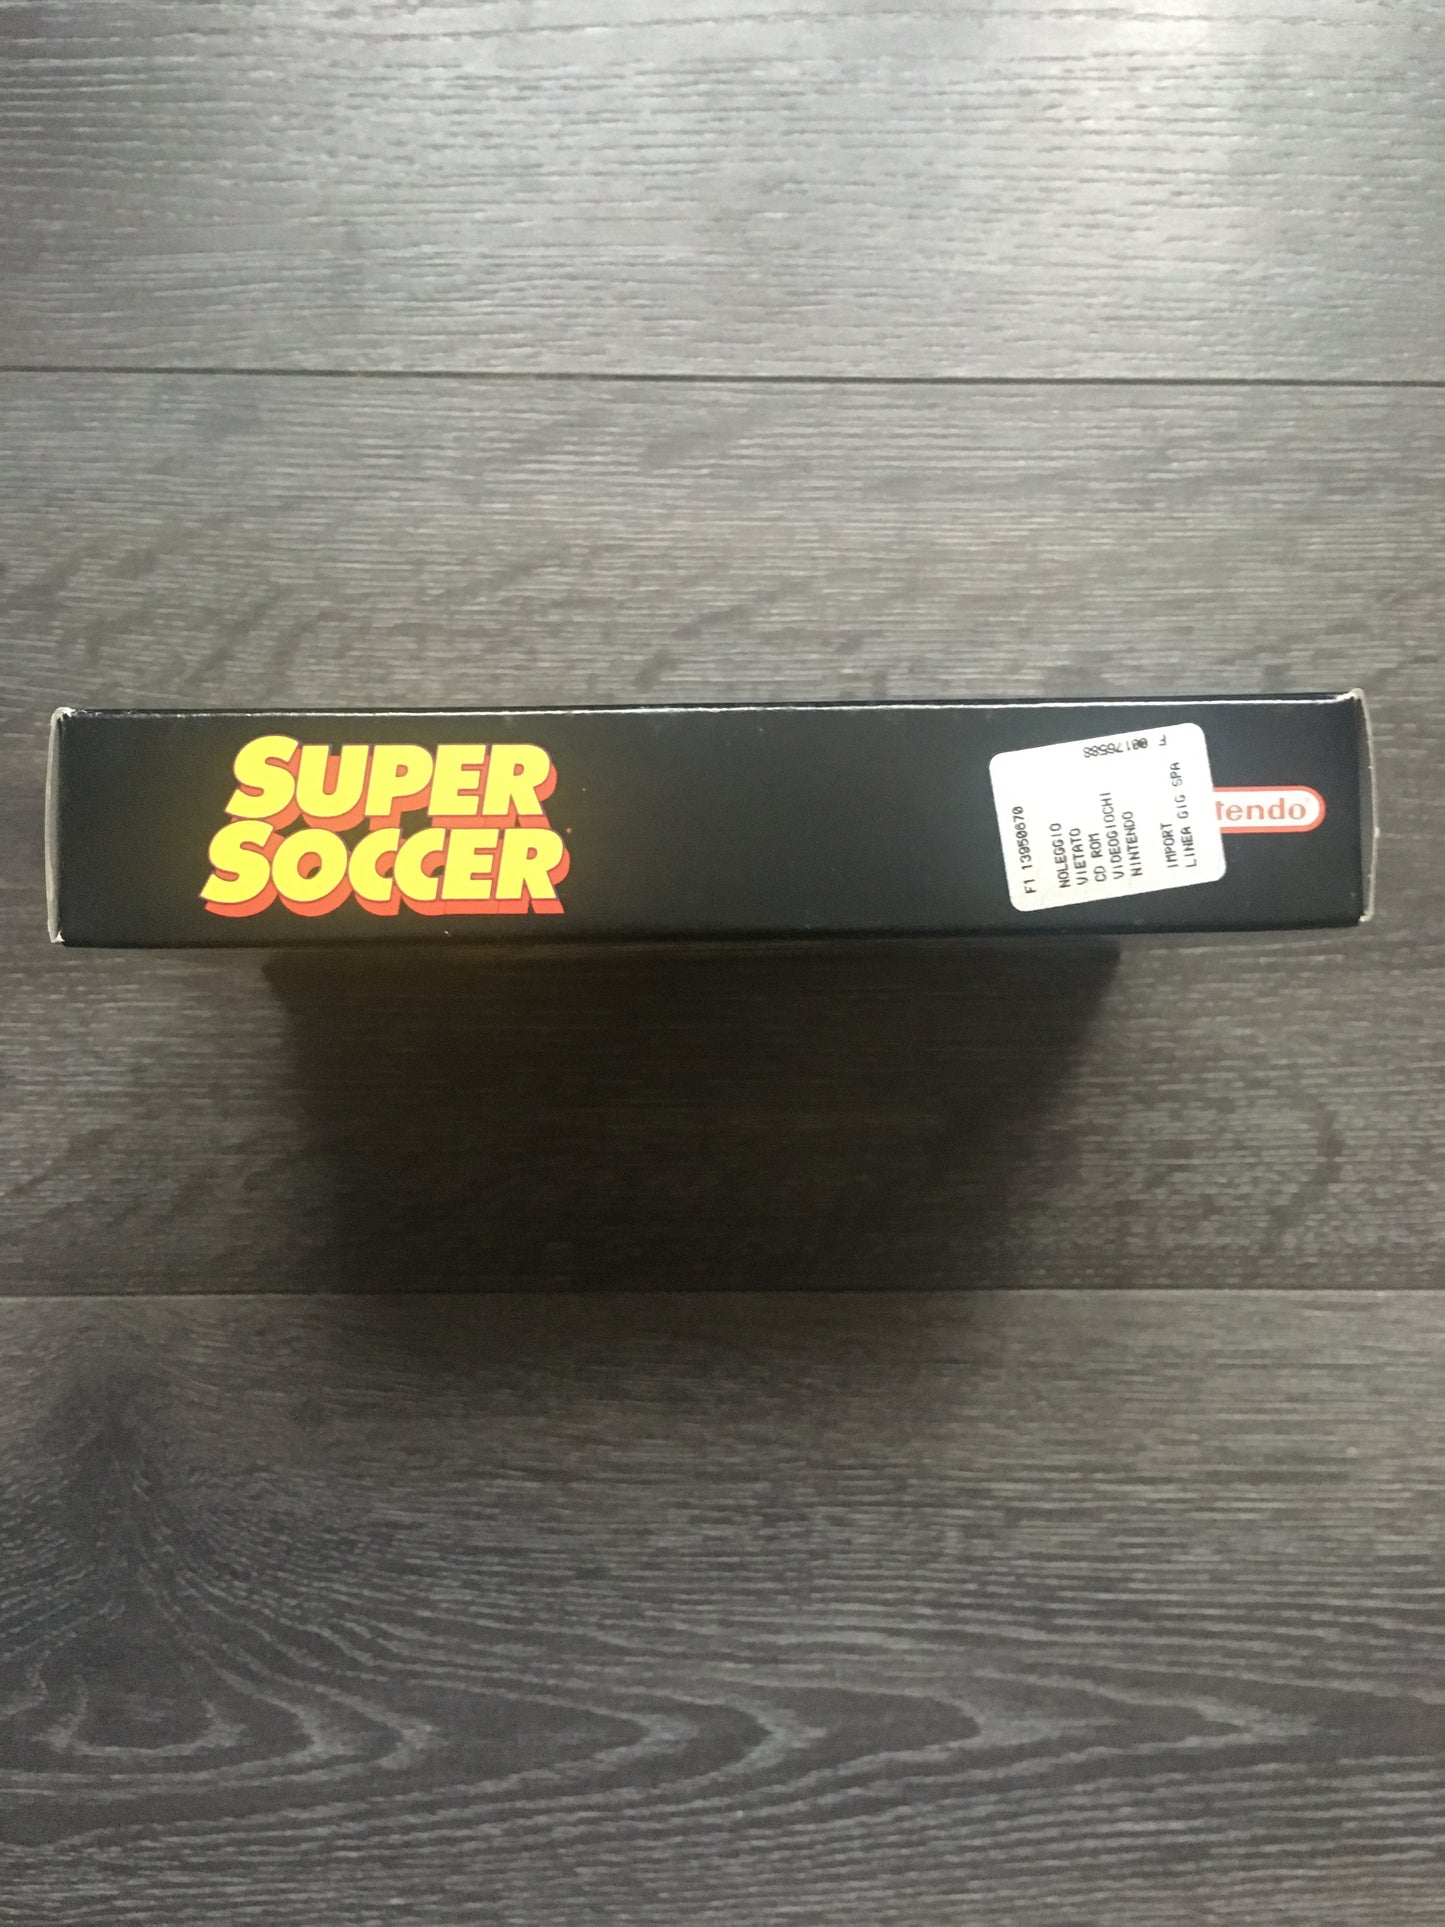 Super soccer super Nintendo neuf